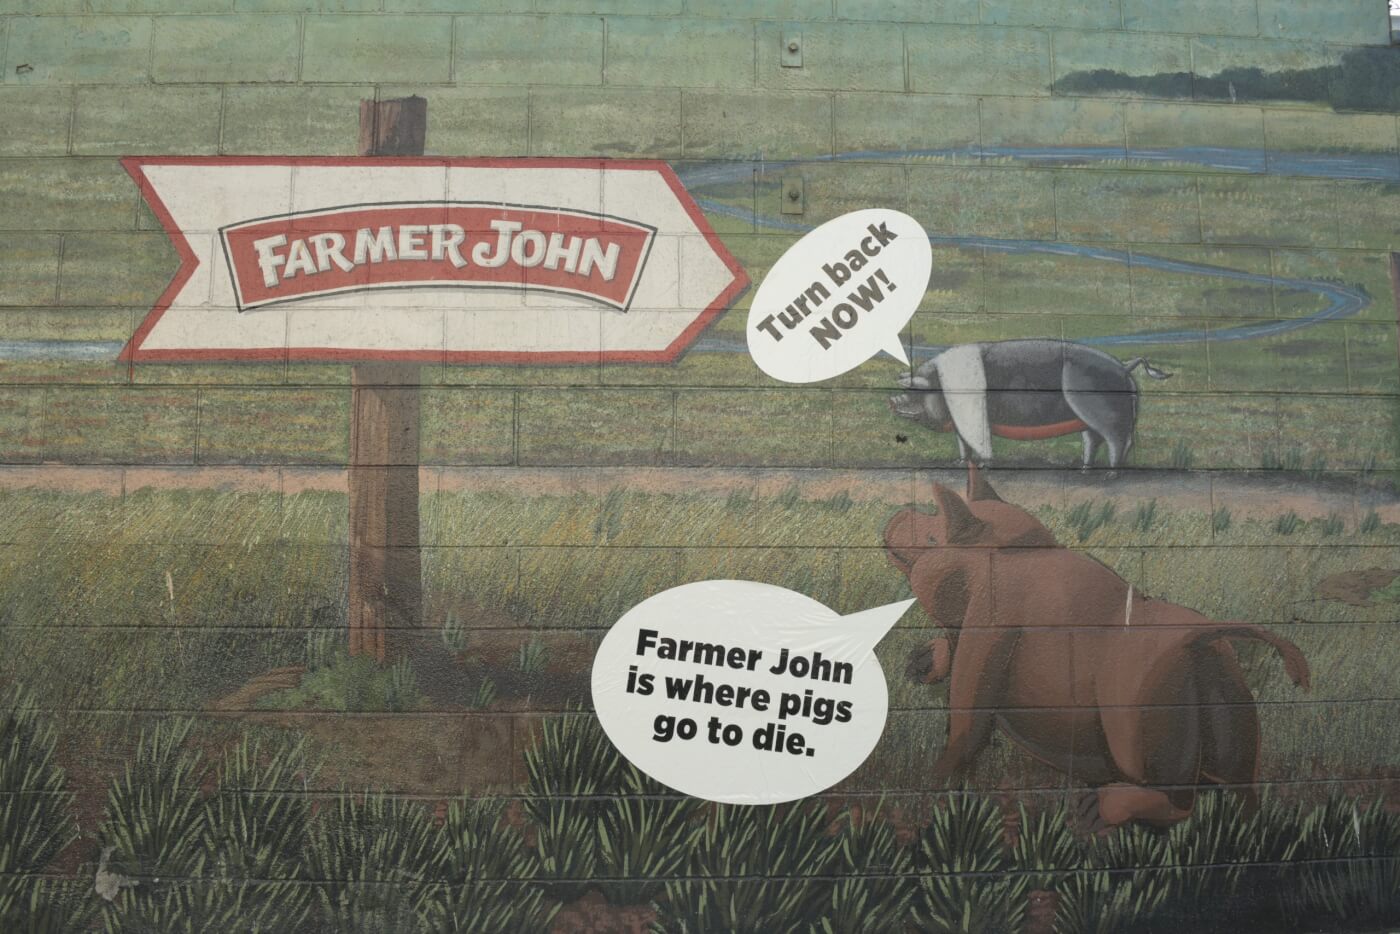 farm john vernon slaughterhouse stickers